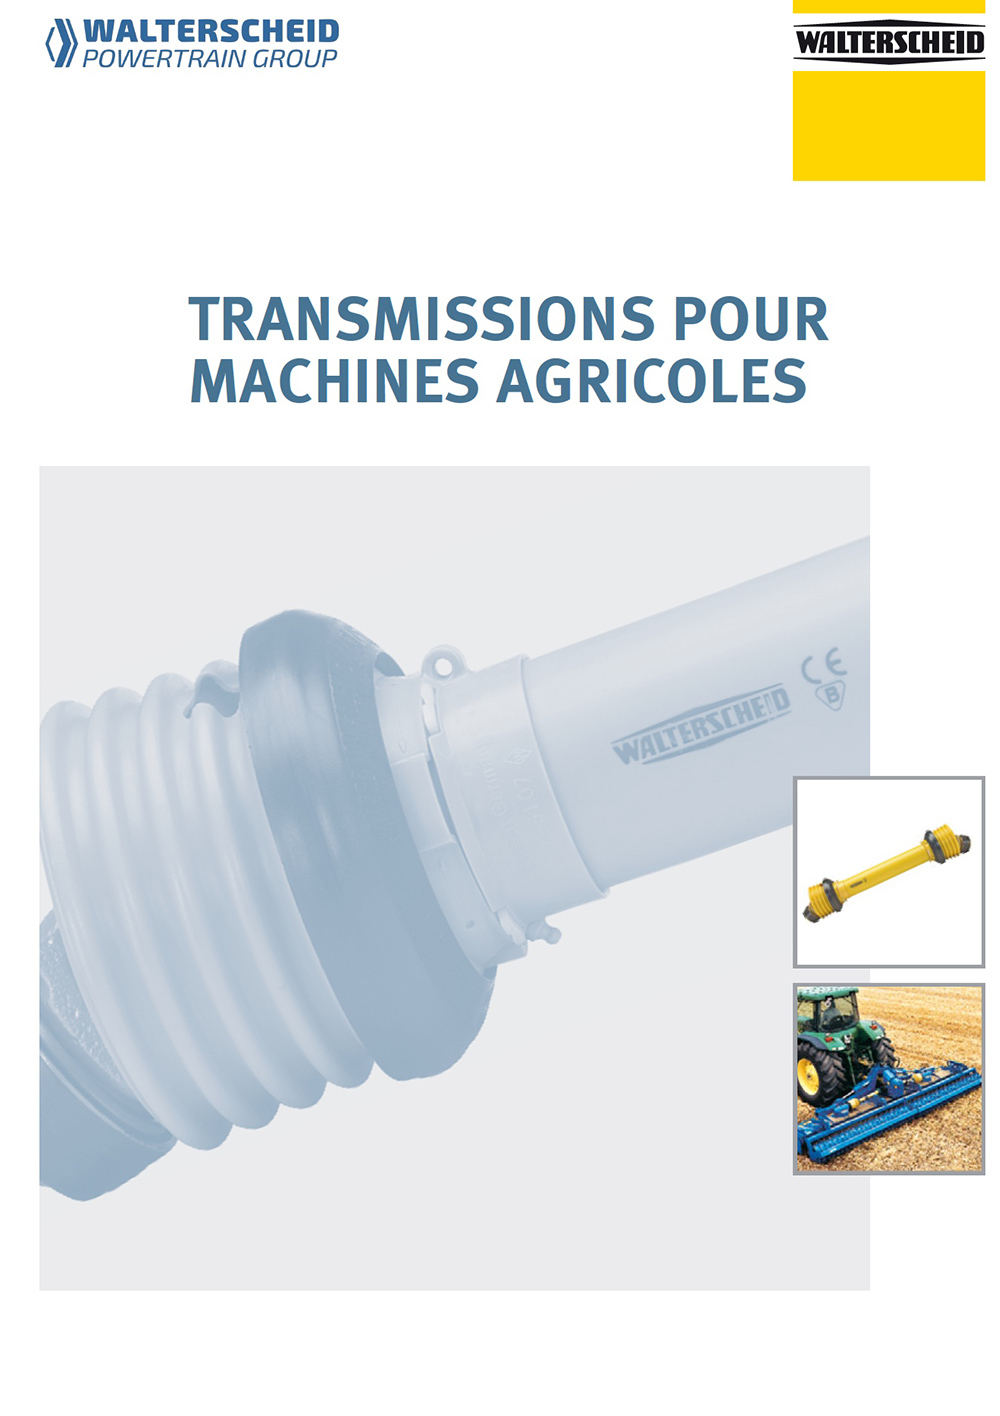 Walterscheid Transmissions pour machines agricoles